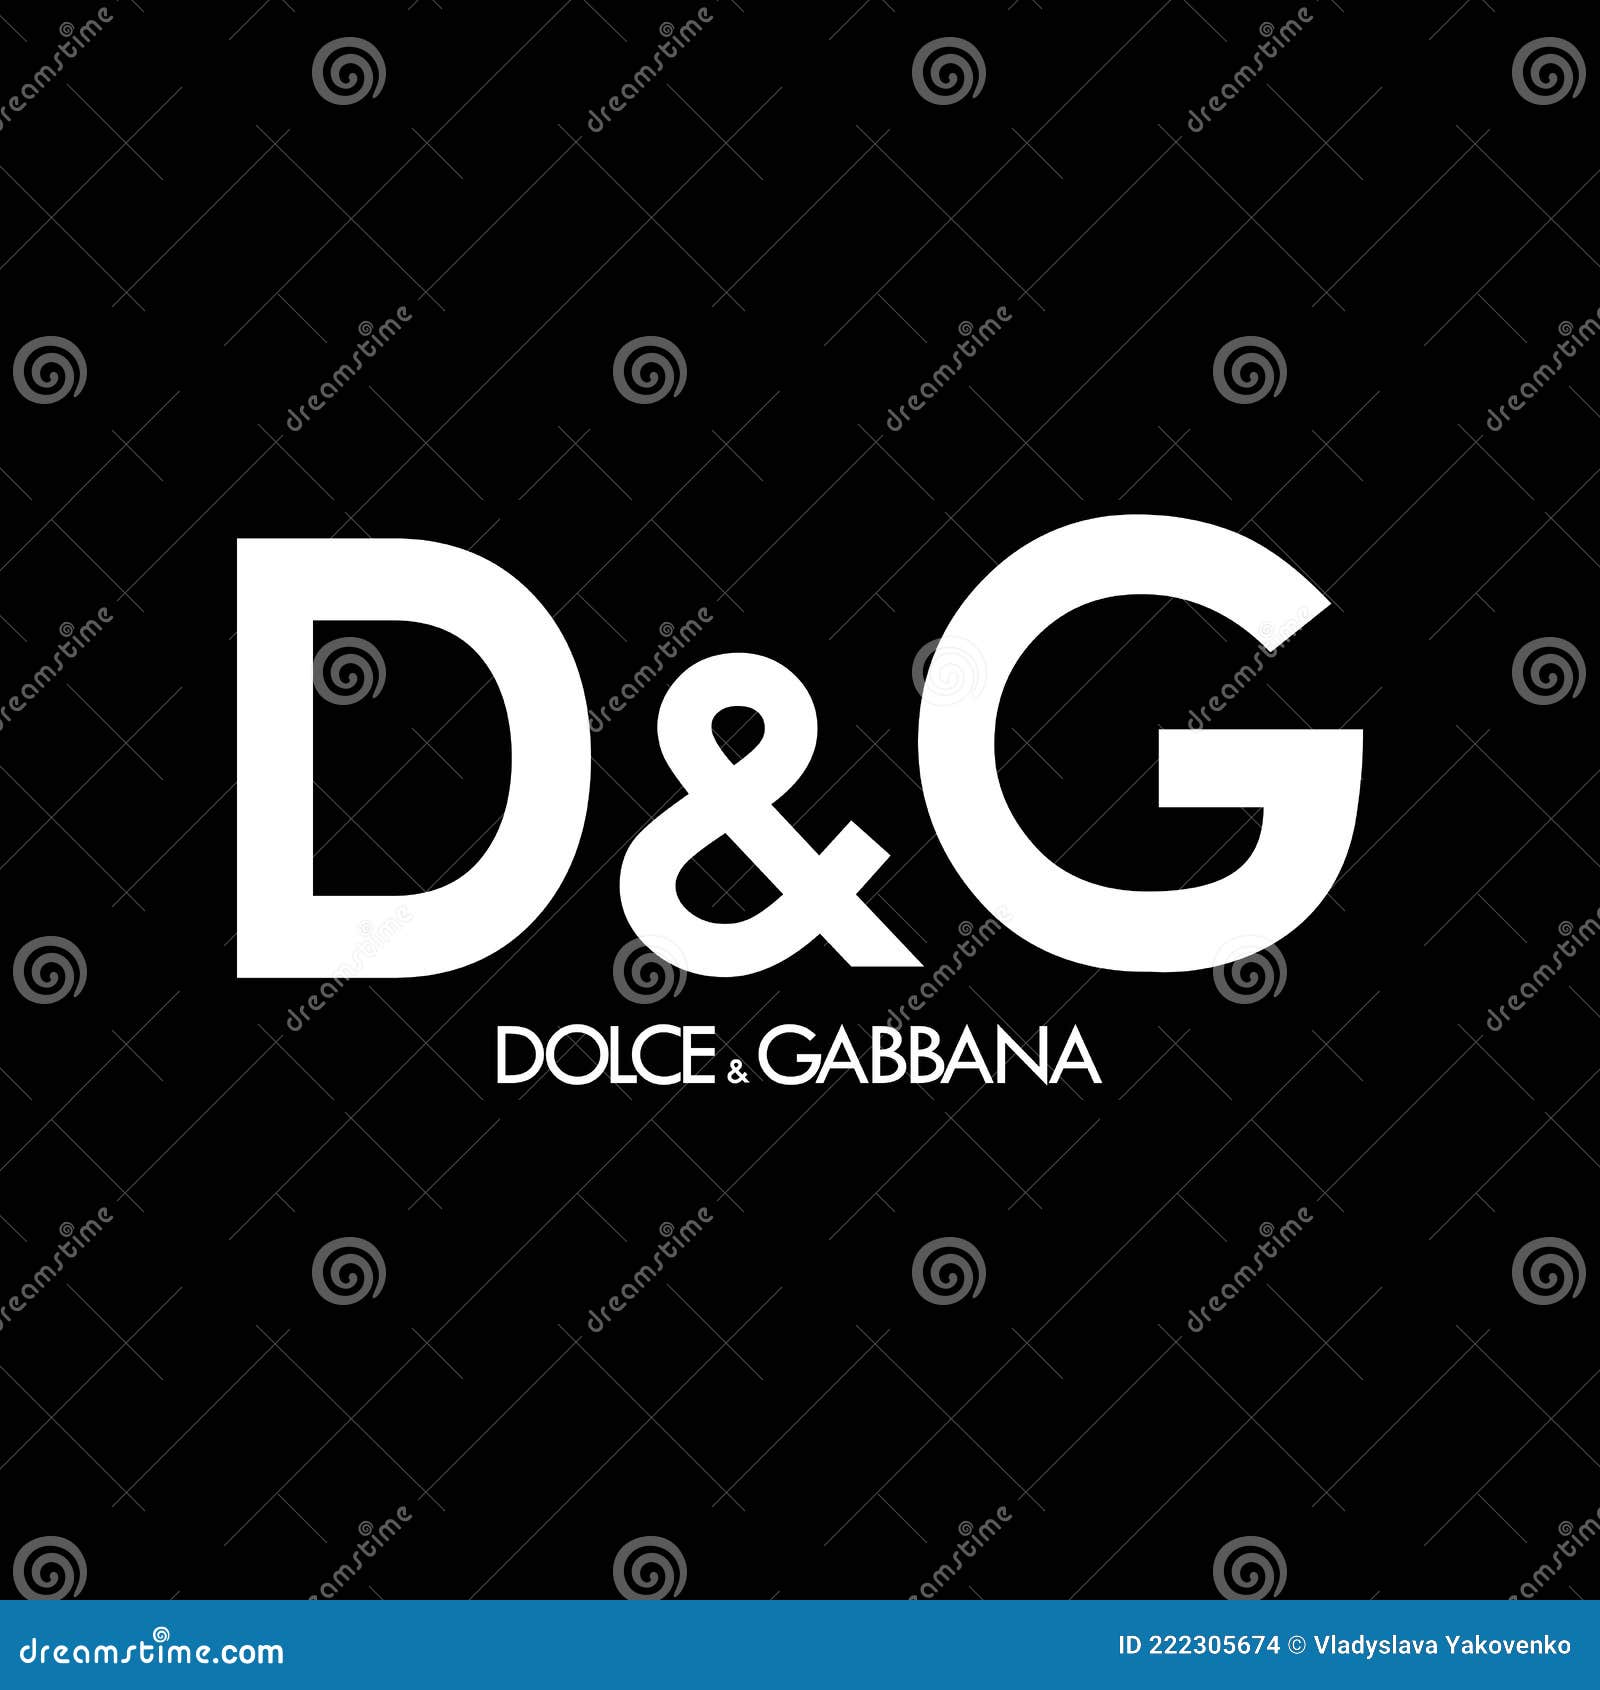 Dolce Gabbana Stock Illustrations – 21 Dolce Gabbana Stock 